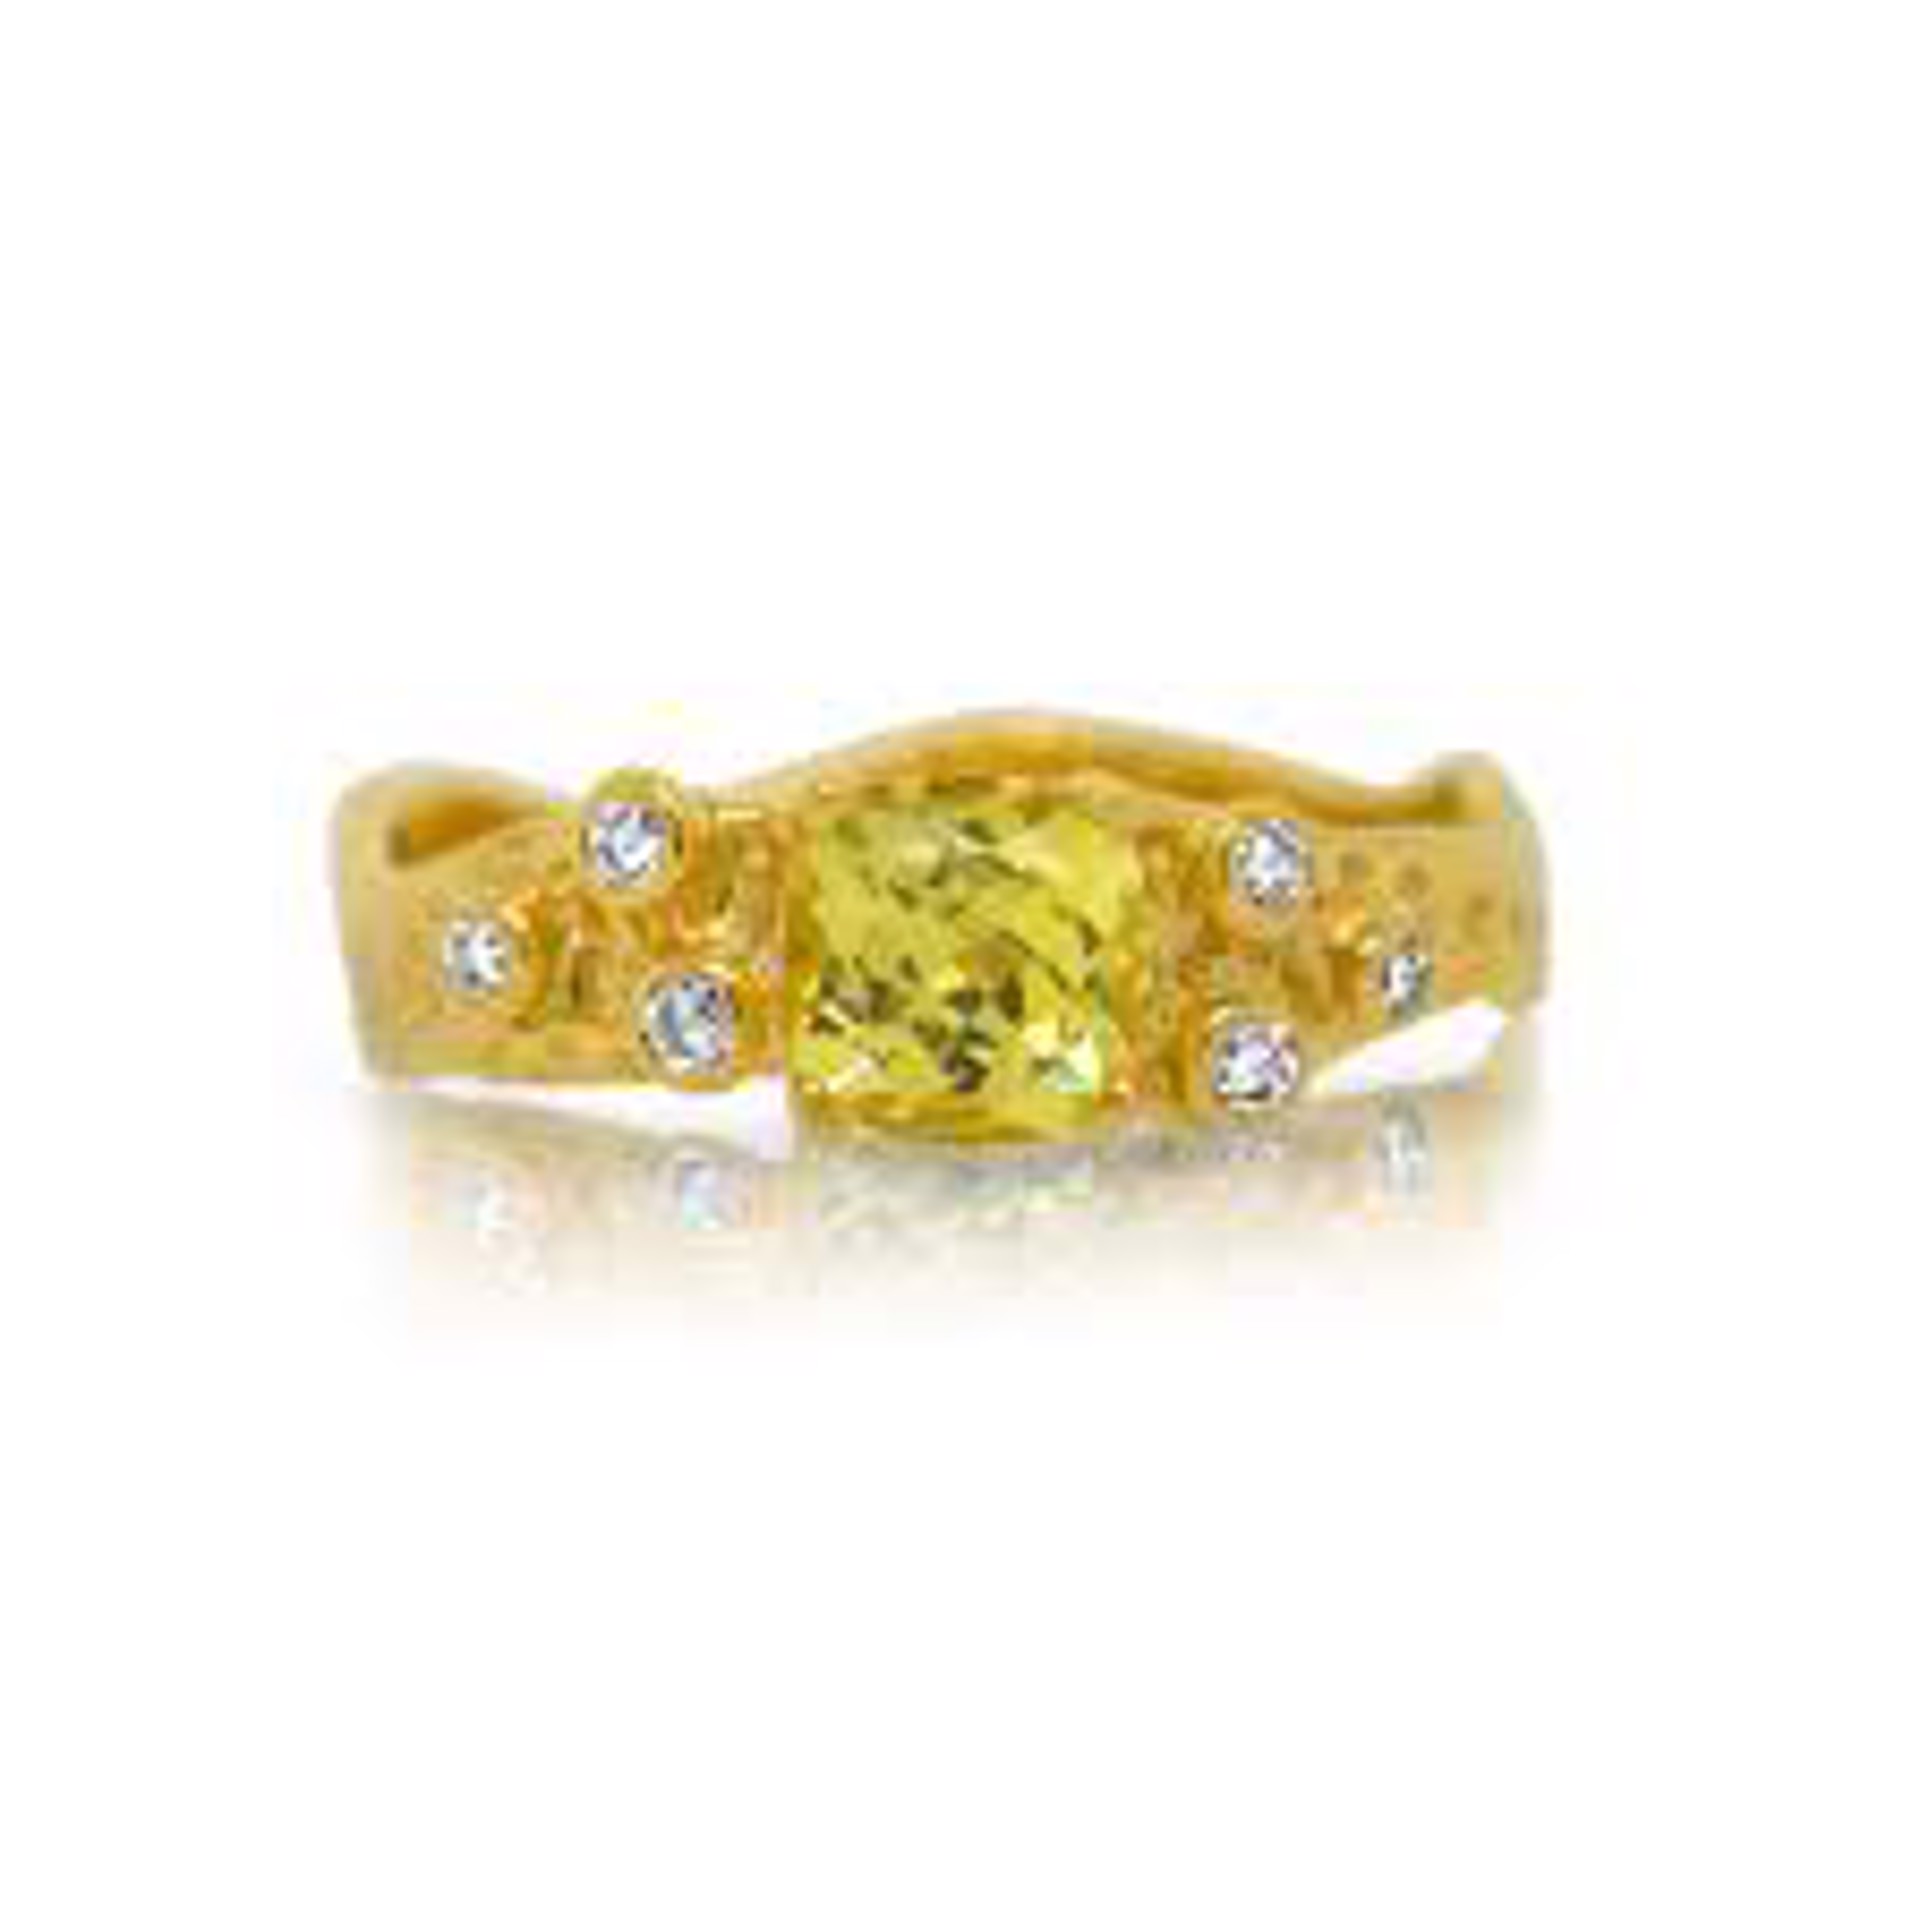 Primrose-18k gold yellow sapphire and diamond ring by Kristen Baird